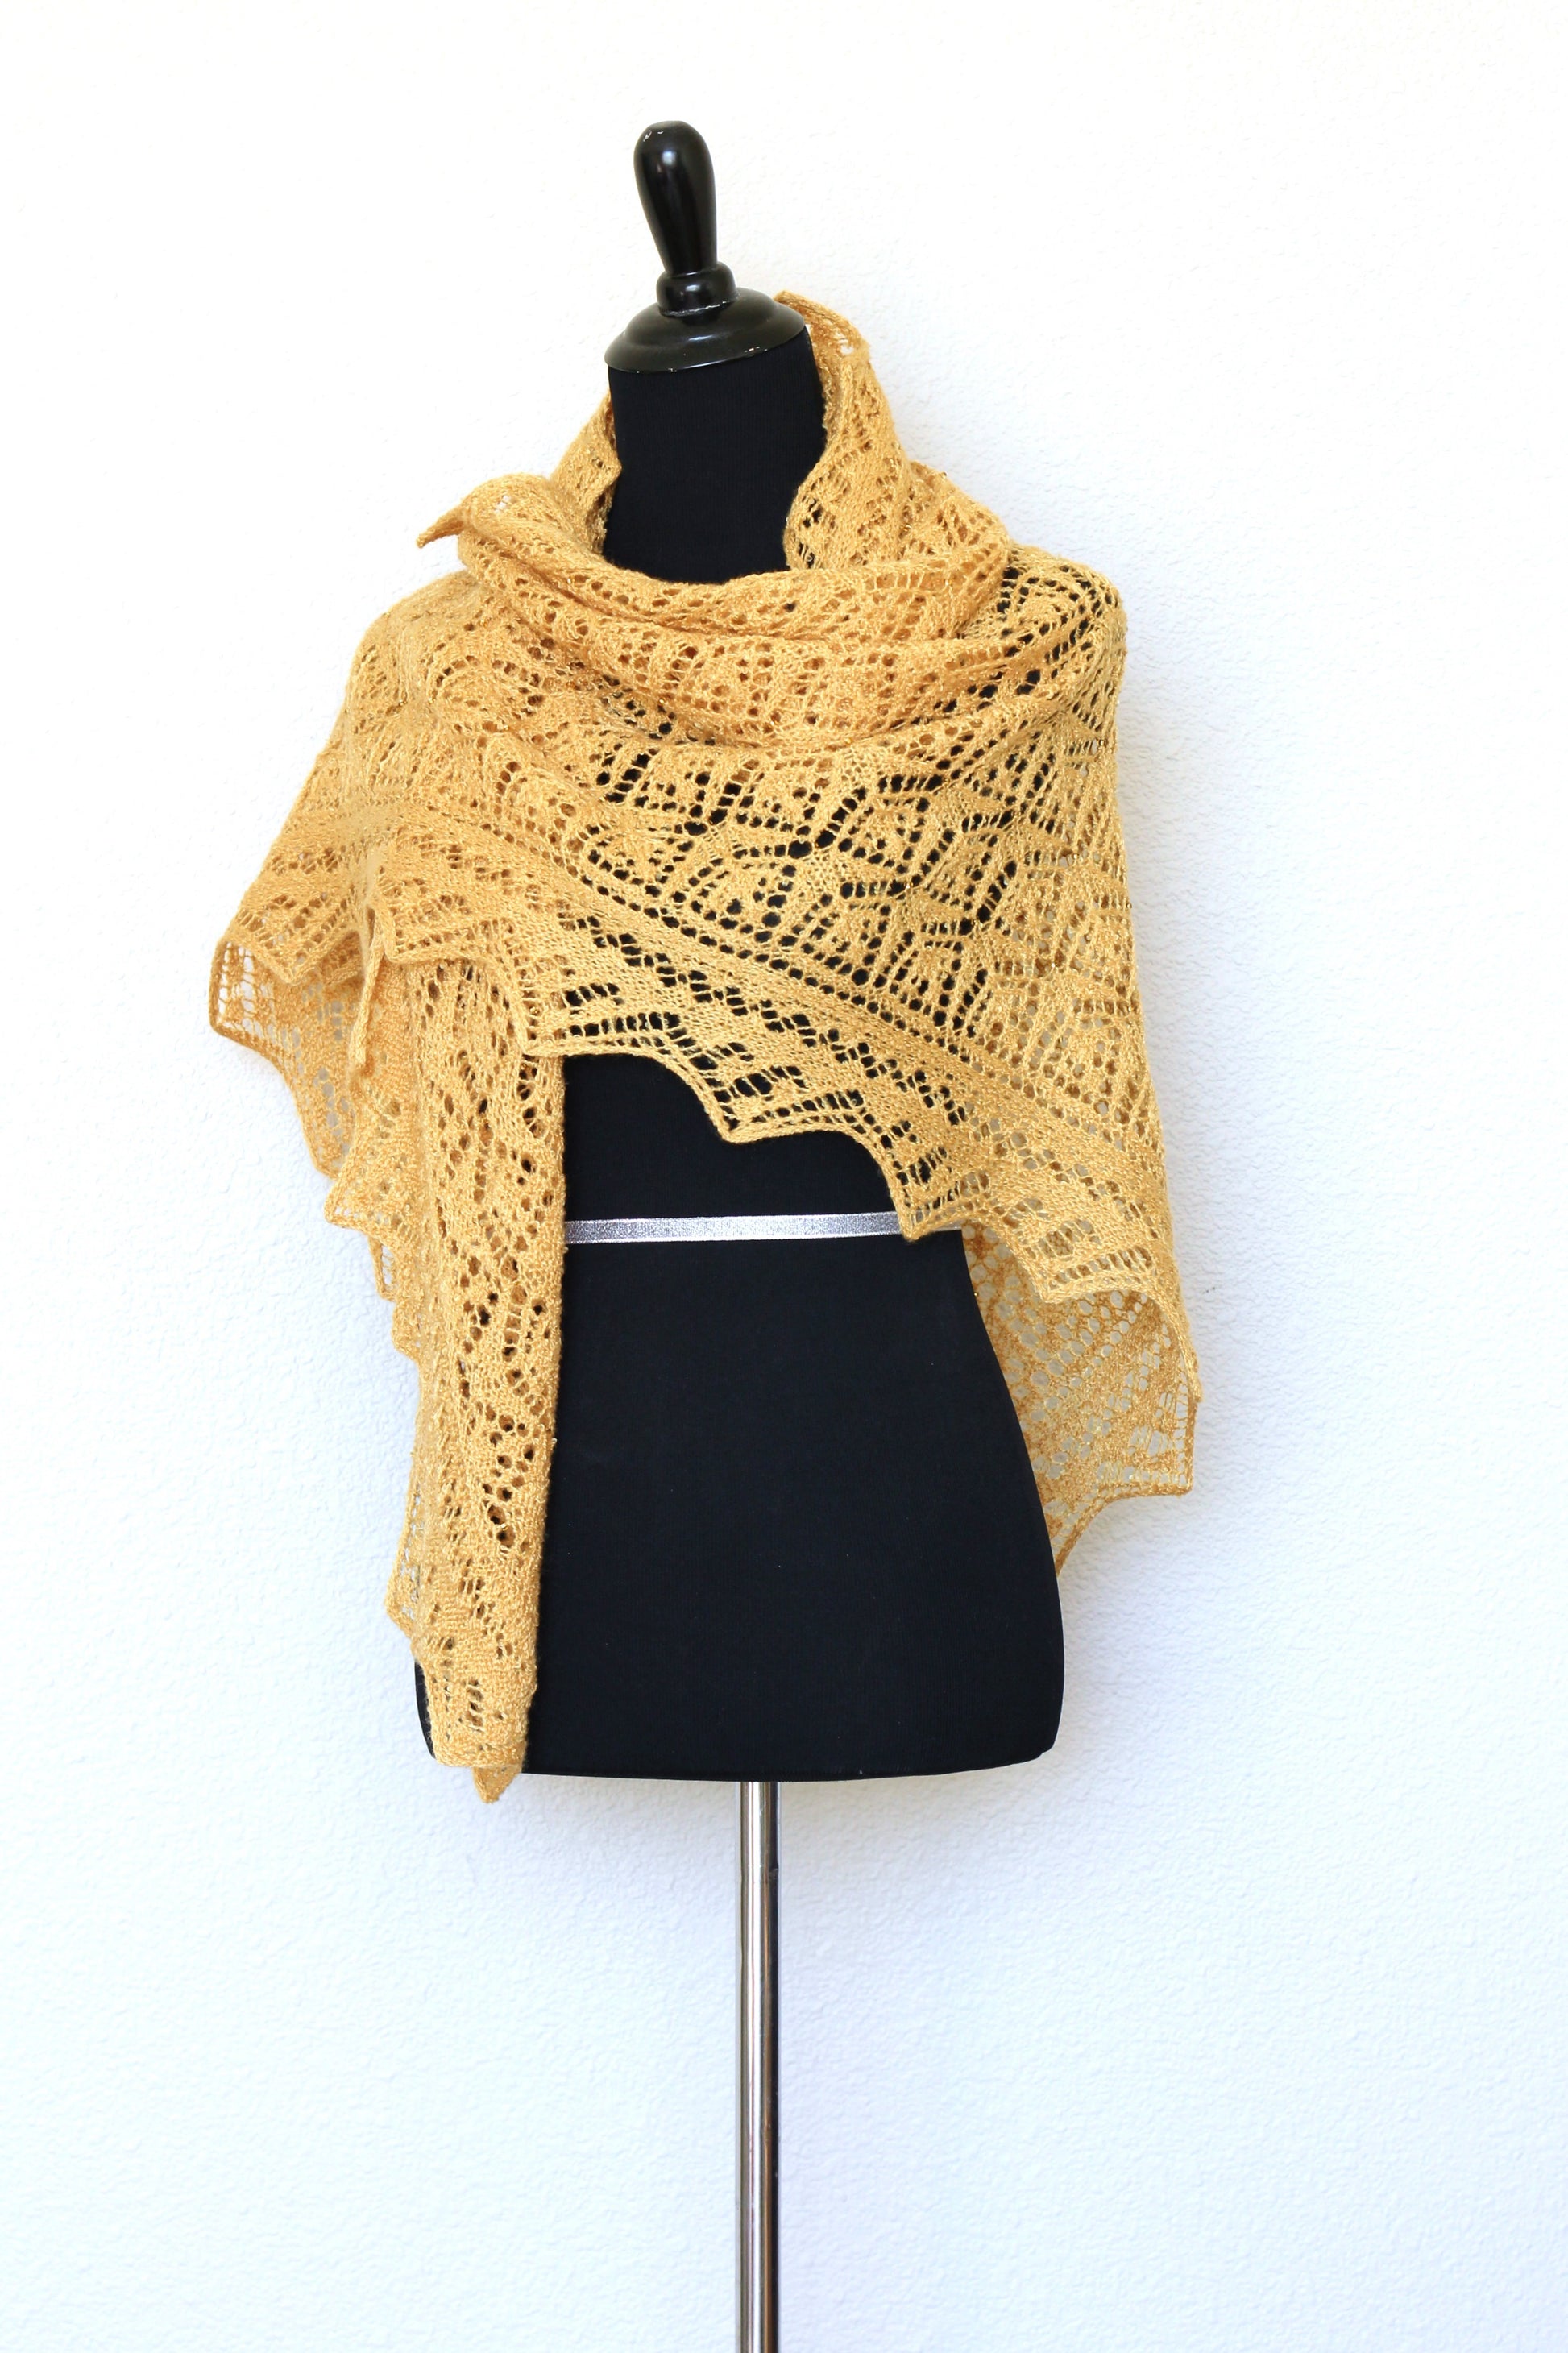 Knit shawl, wedding shawl in mustard yellow color, bridesmaids shawl, bridal shawl